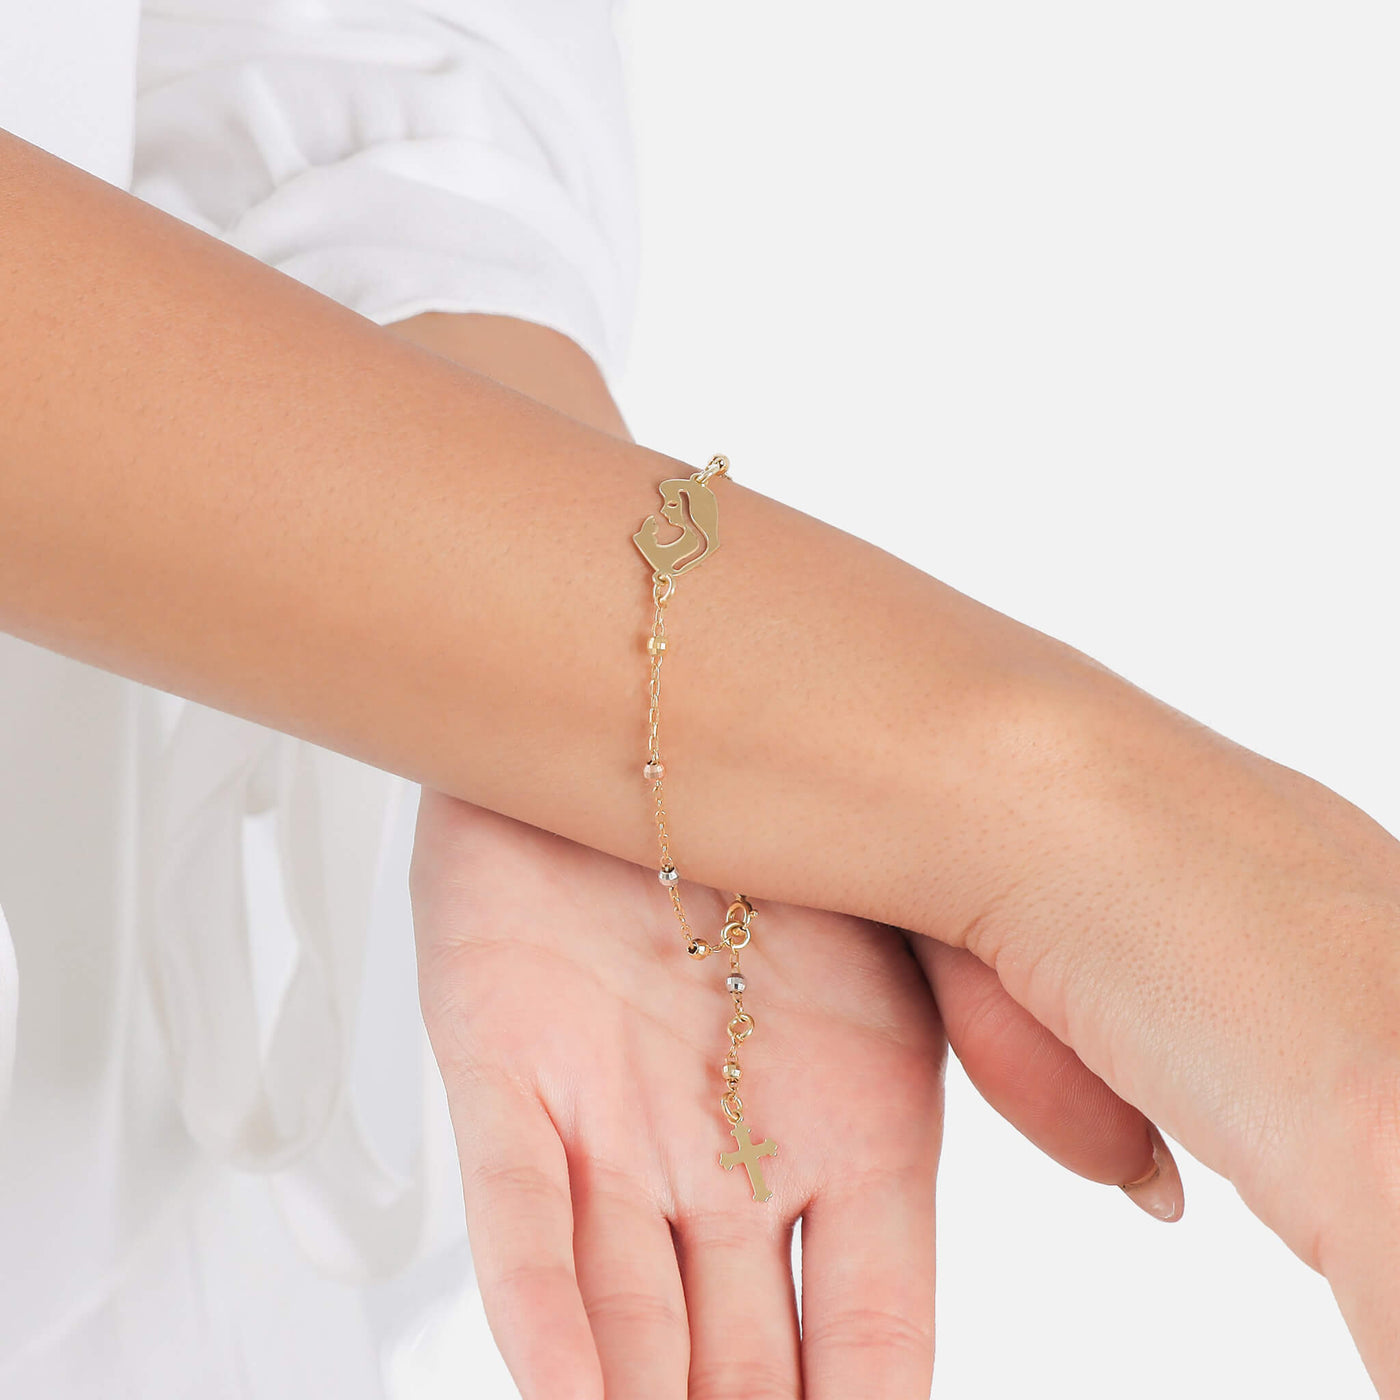 Striking Silhouette of Virgin Mary & Crucifix Bracelet - Gloria Jewels